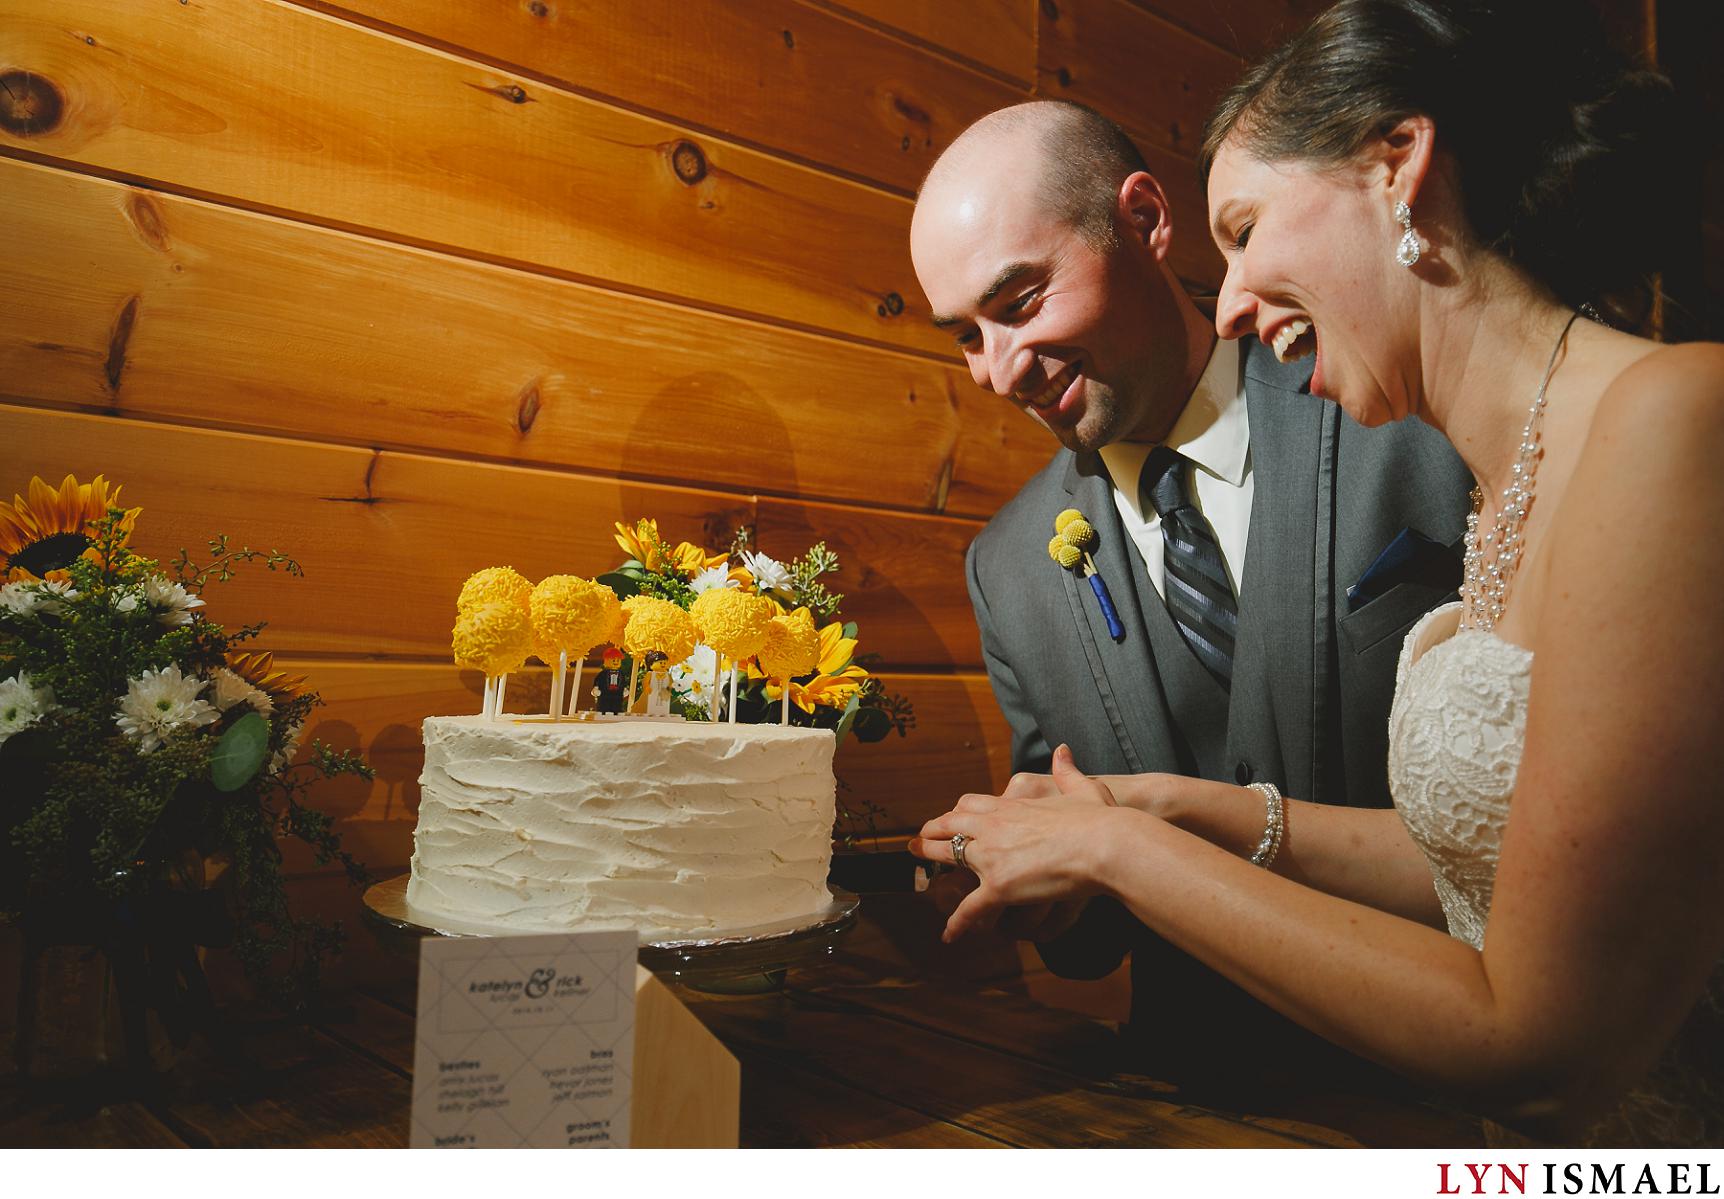 Bride and groom cut their cake at their Holland Marsh wedding reception